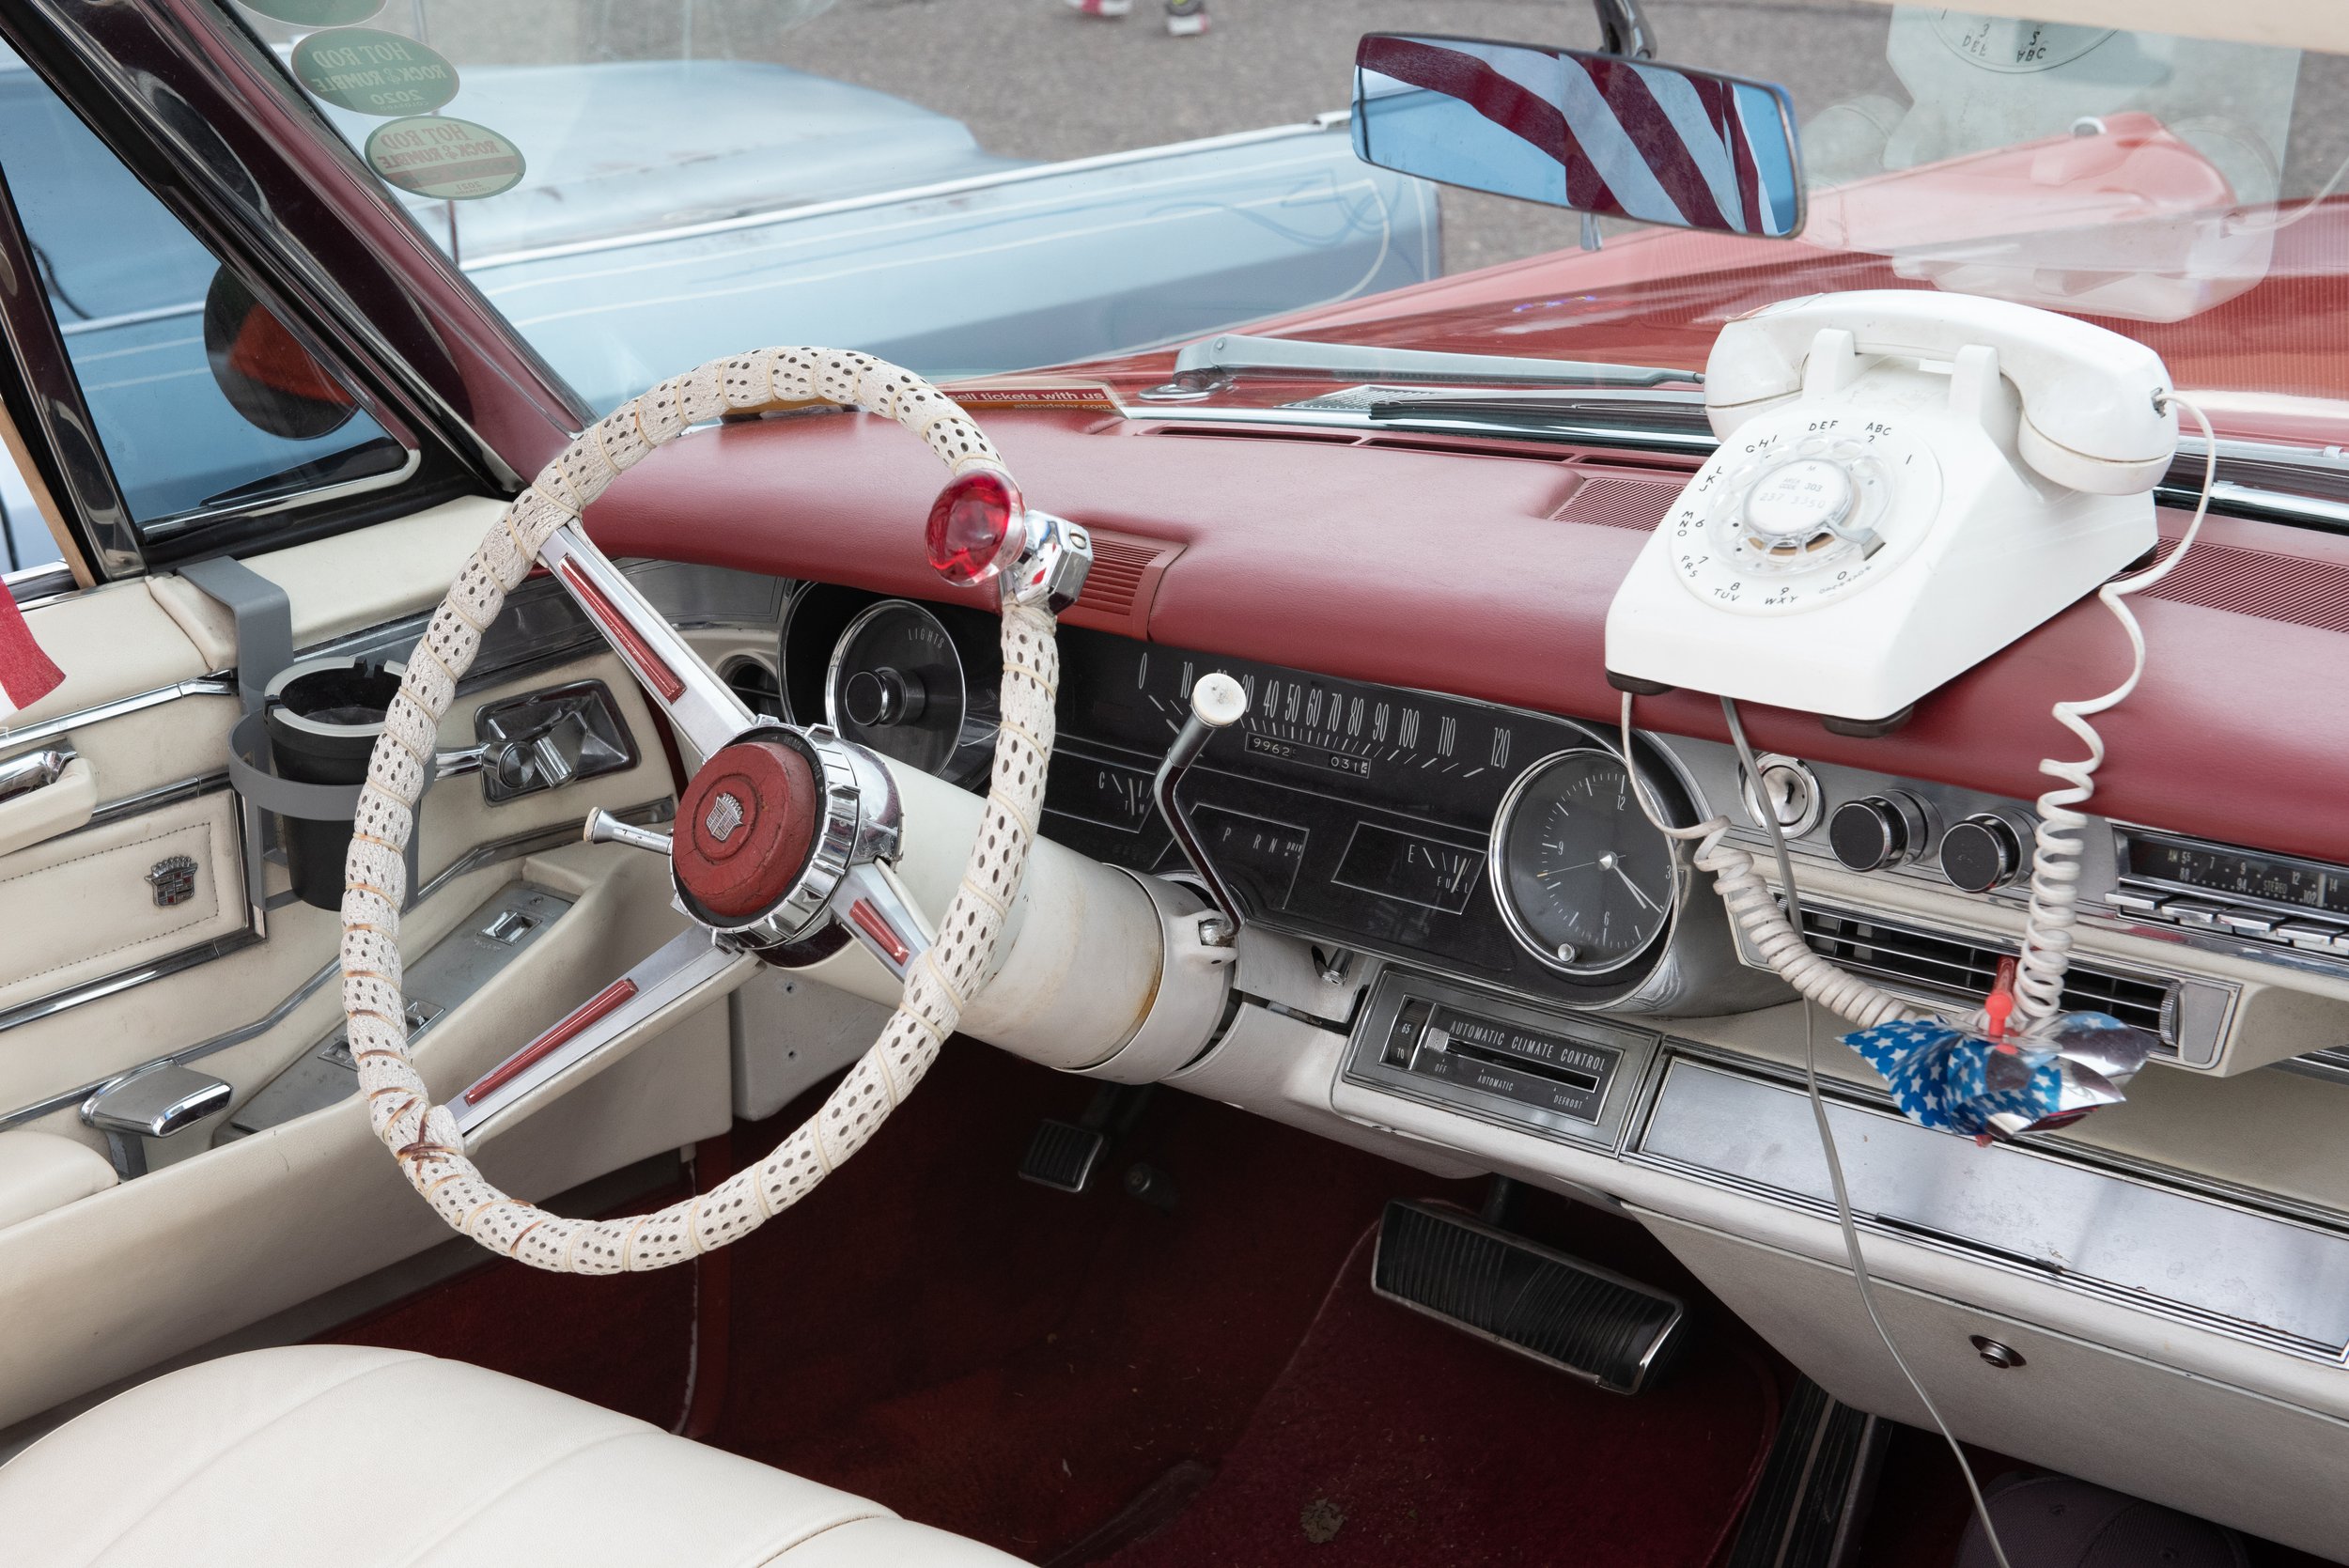  Photo: Adrian Michael  1967 Cadillac Coupe de Ville interior. 